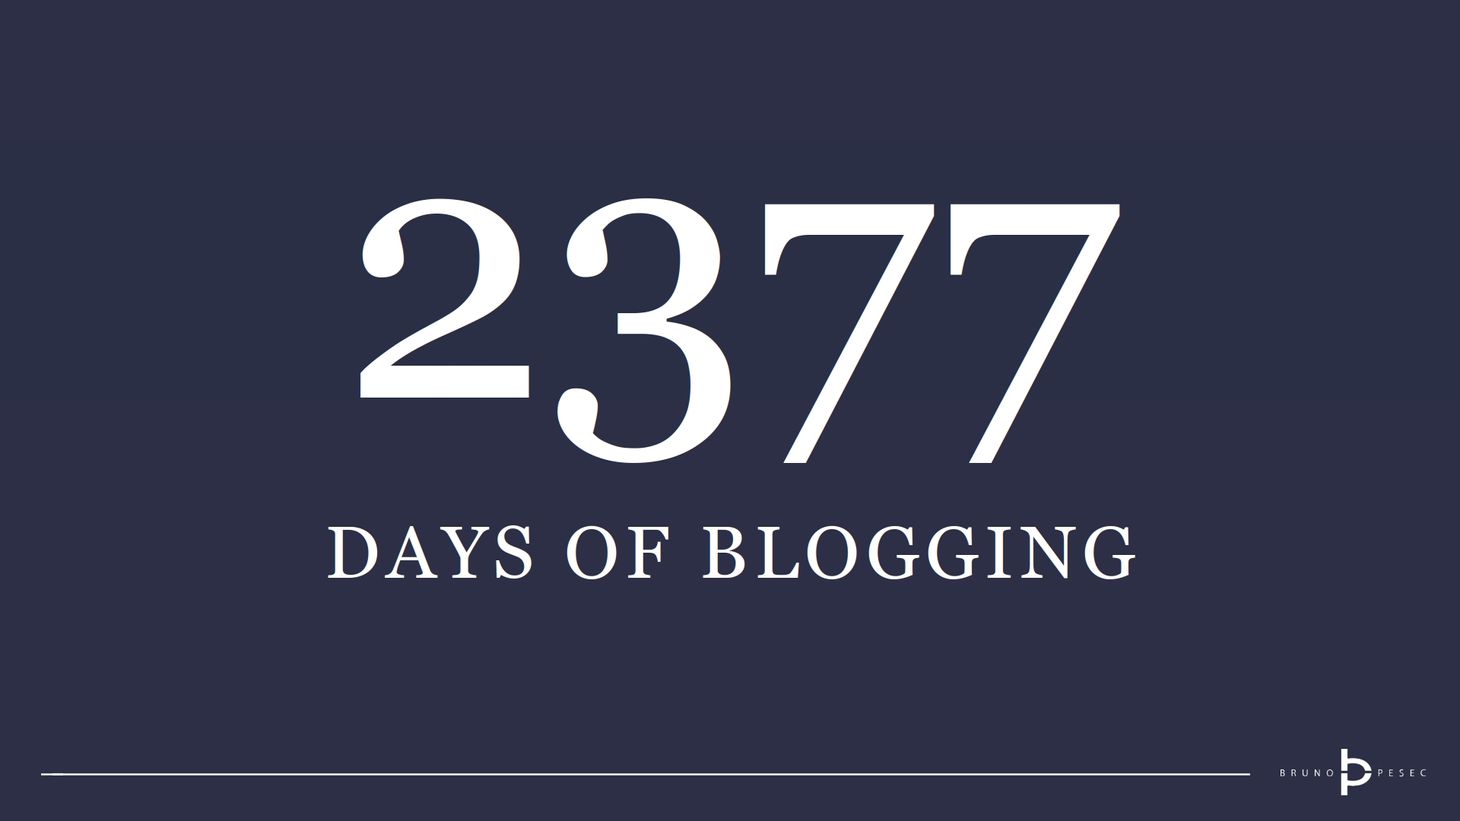 2377 days of blogging